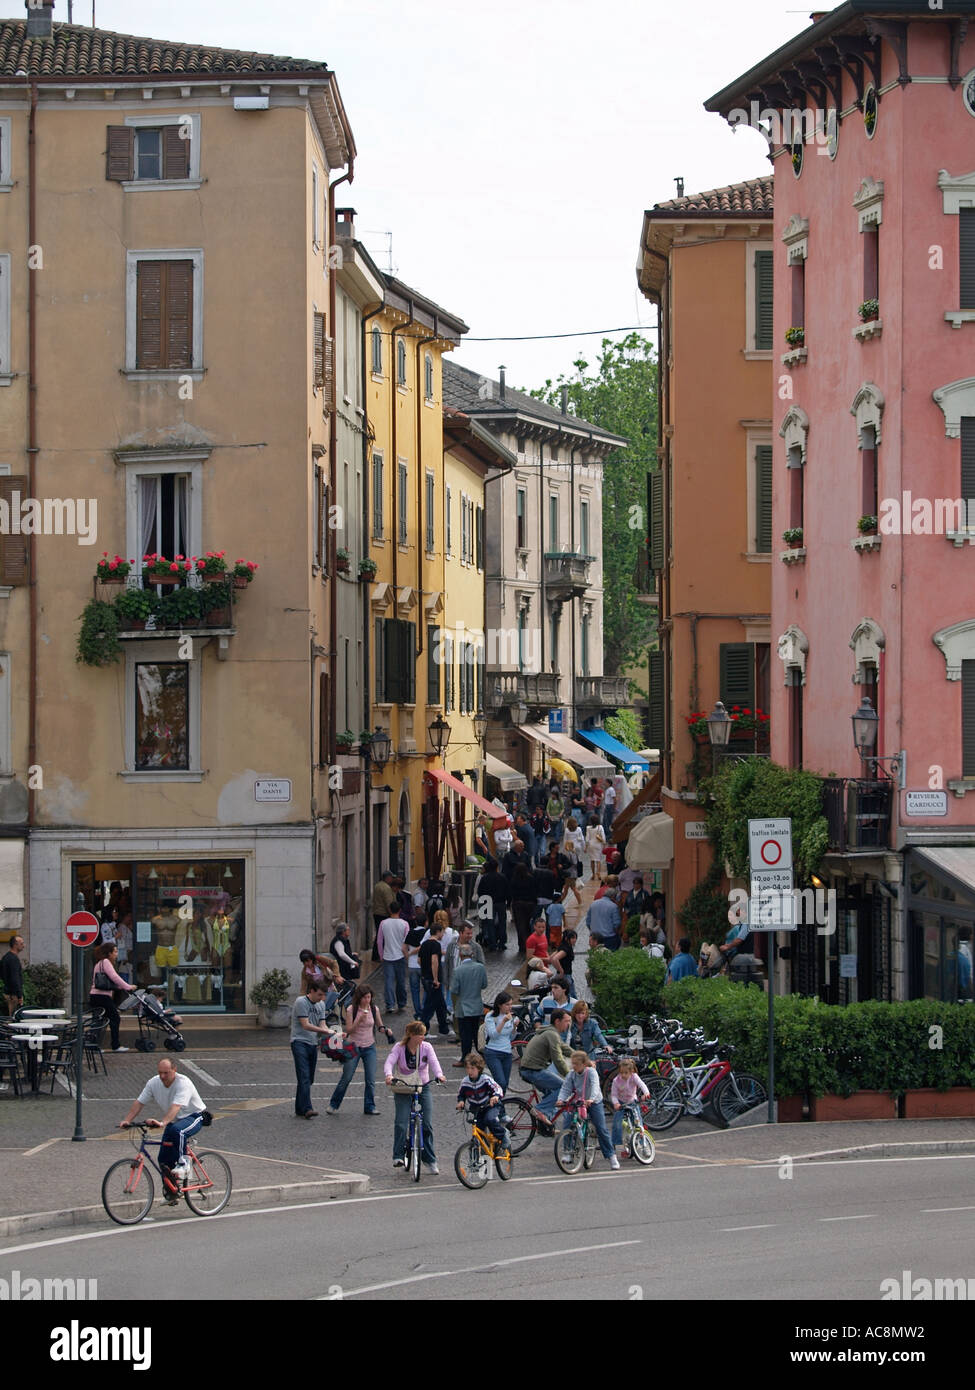 Shopping street in the old city of Peschiera del Garda Garda lake Italy Stock Photo